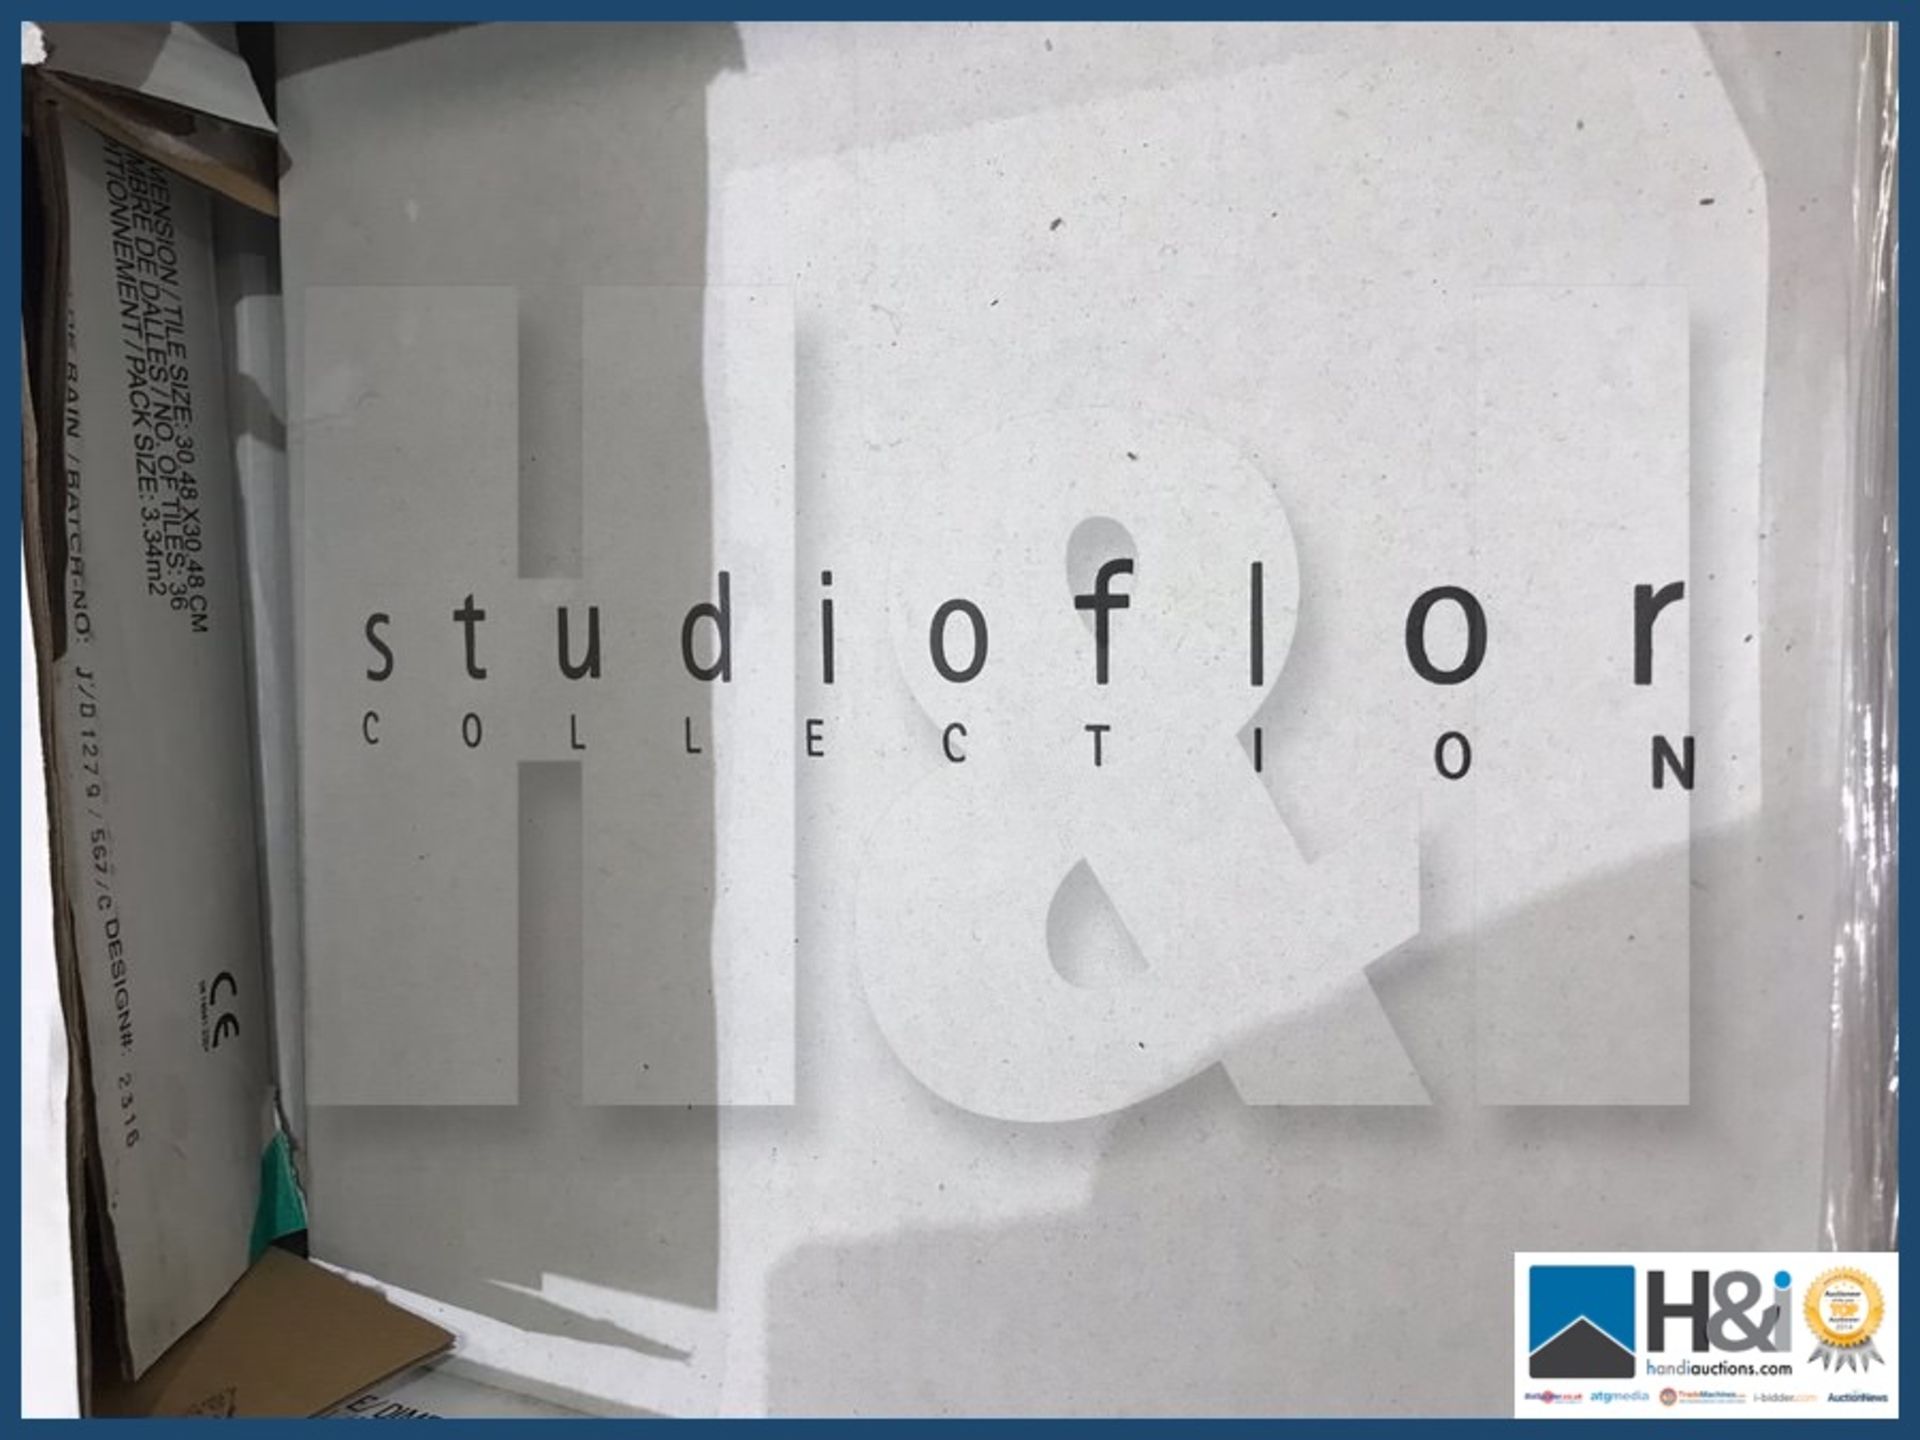 Polyflor Expona studio floor Terracotta tiles 12x12 inch. 3.34m2 per box 6 boxes = 20.04m2 per lot. - Image 2 of 4